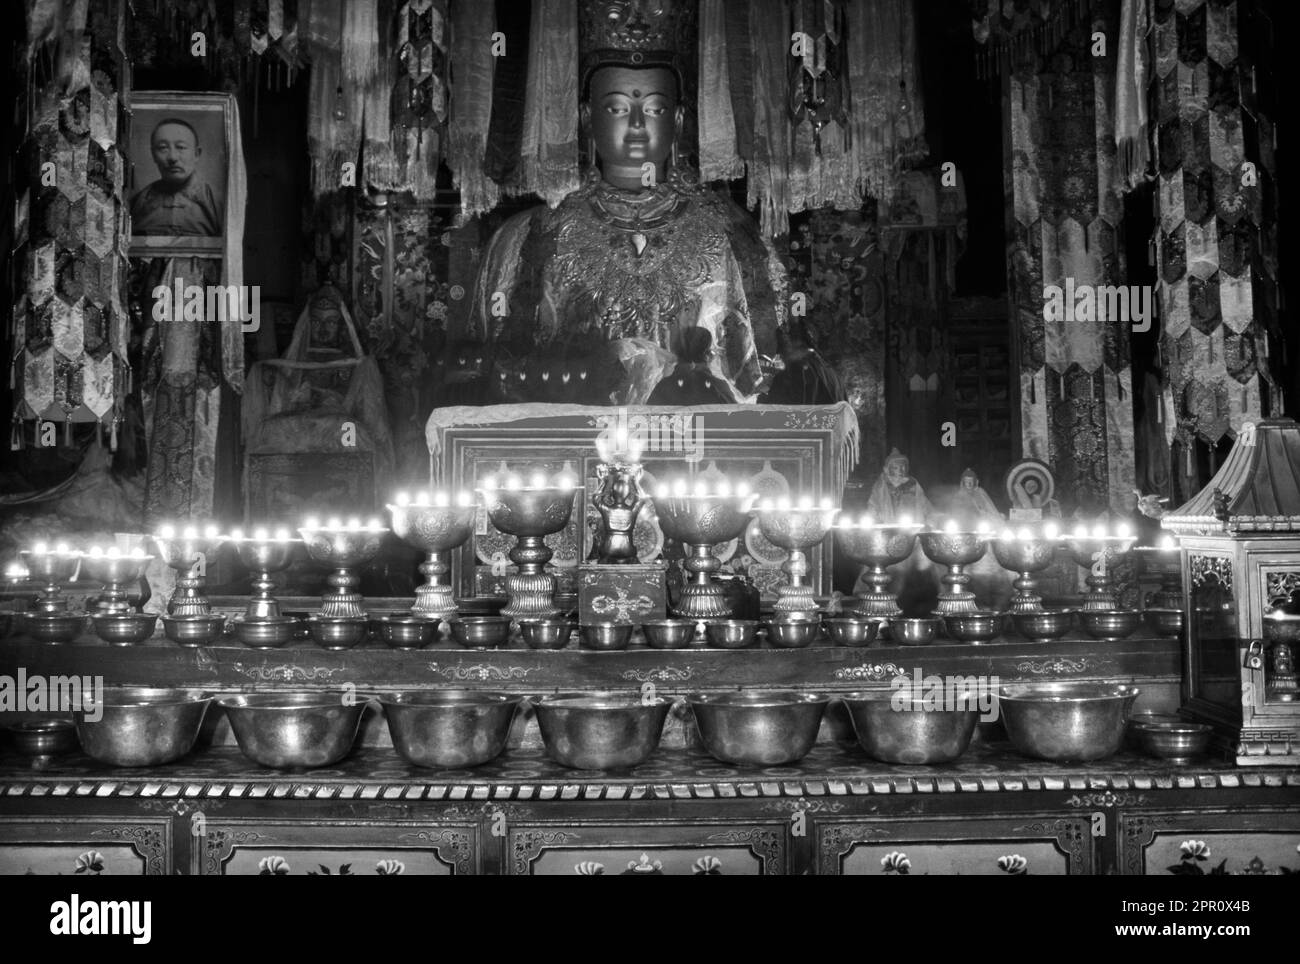 BUTTER LAMPS & SHAKYAMUNI STATUE inside the main temple at SAMYE MONASTERY known as SAMYE UTSE - TIBET Stock Photo